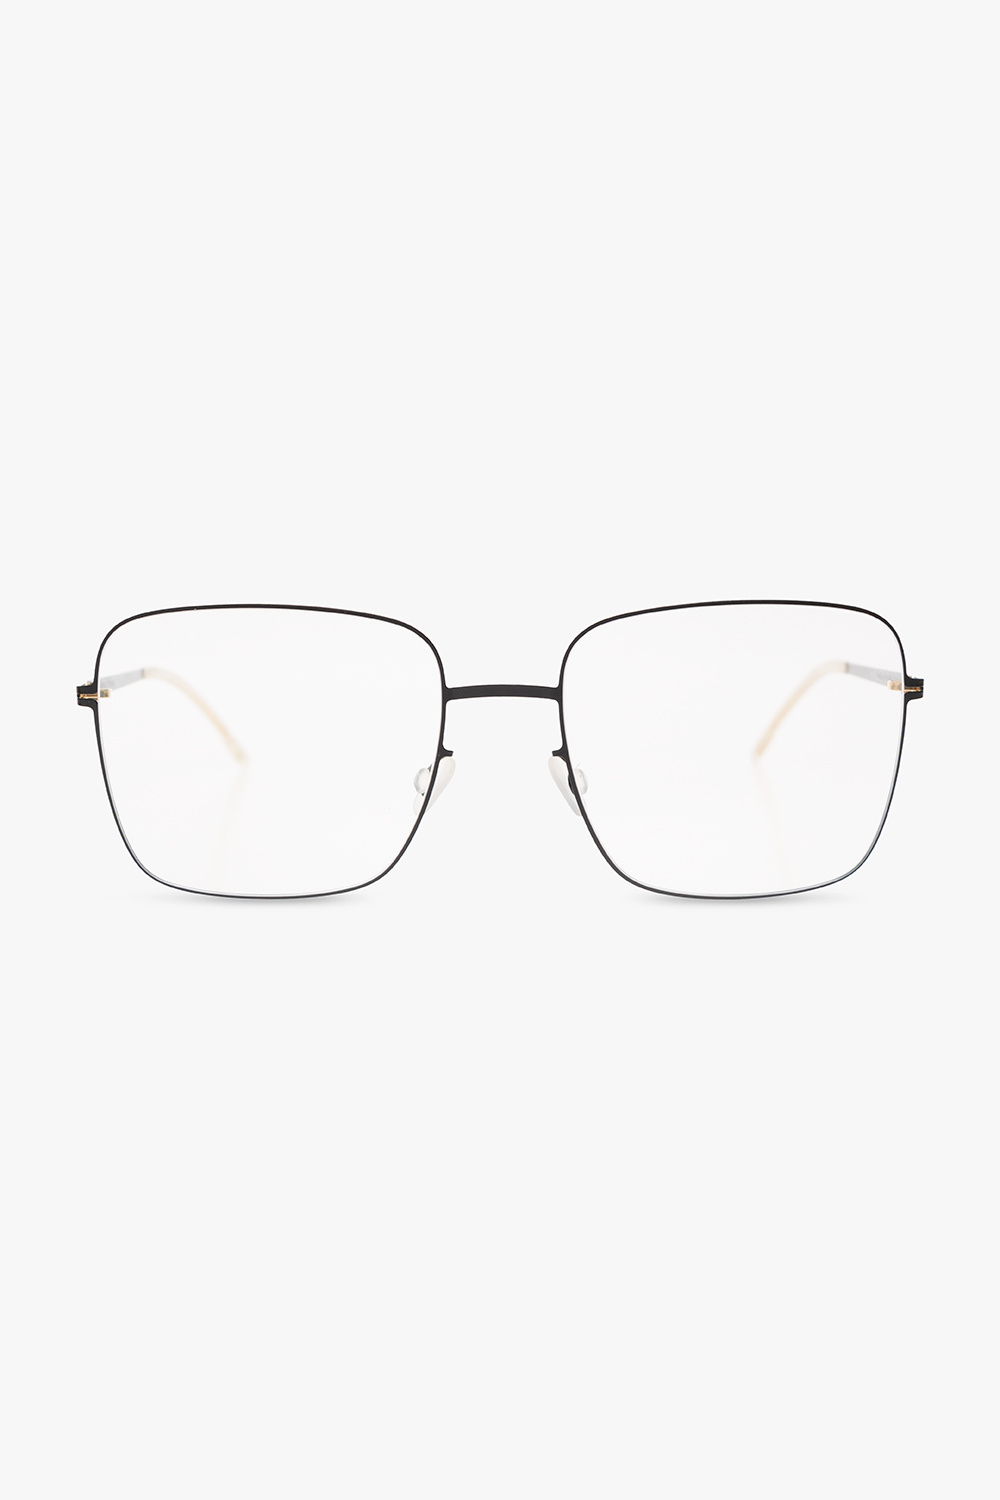 Mykita ‘Sila’ optical glasses